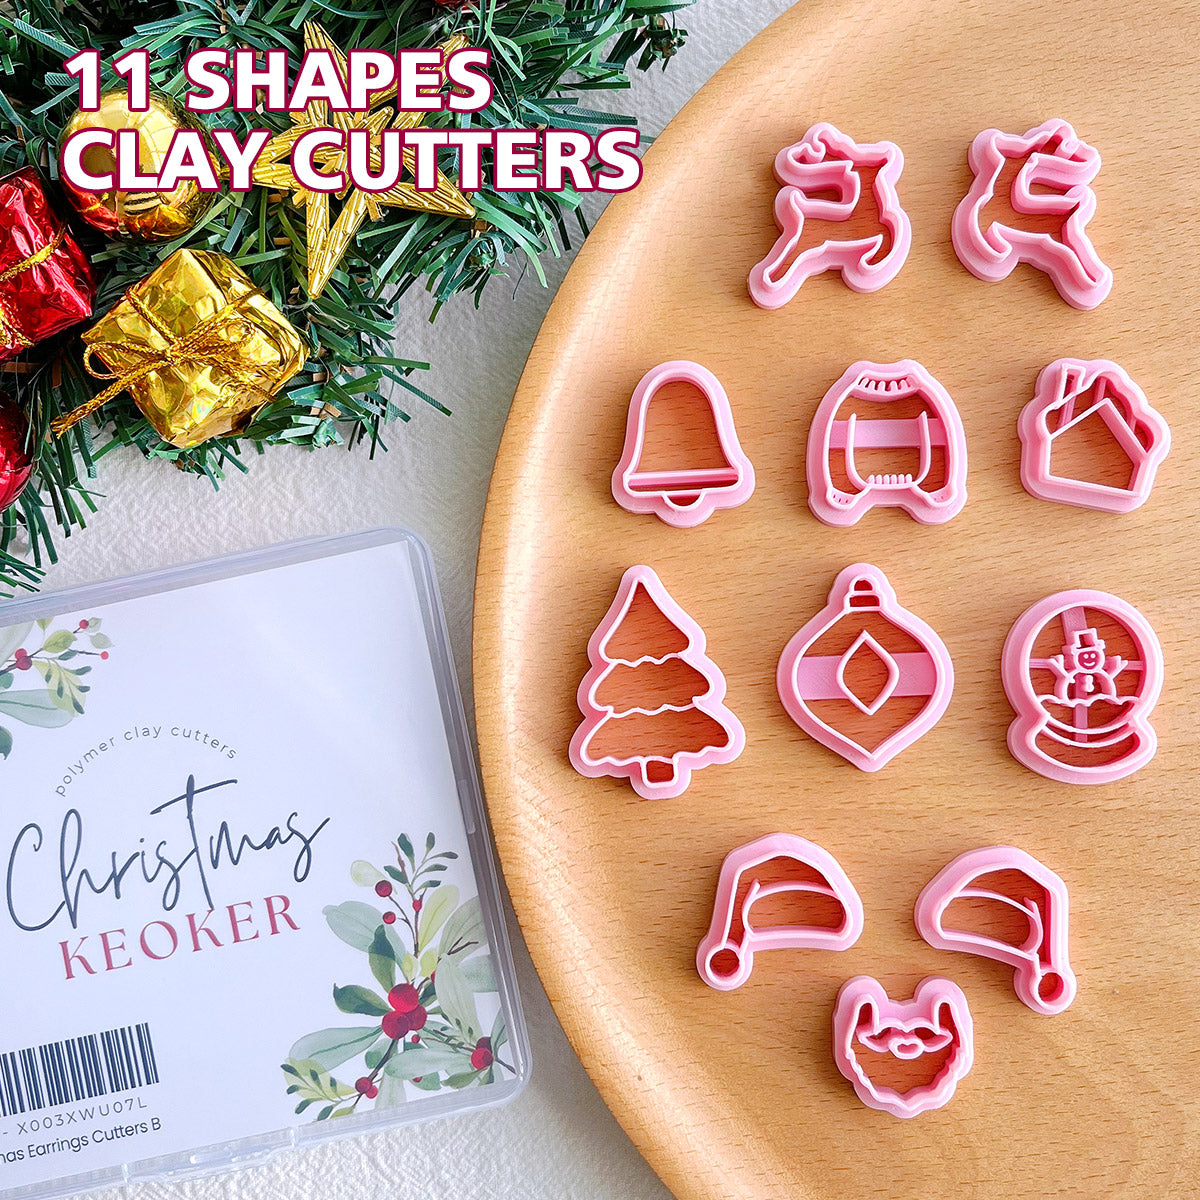 Keoker Mini Christmas Polymer Clay Cutters Mini Holiday Clay